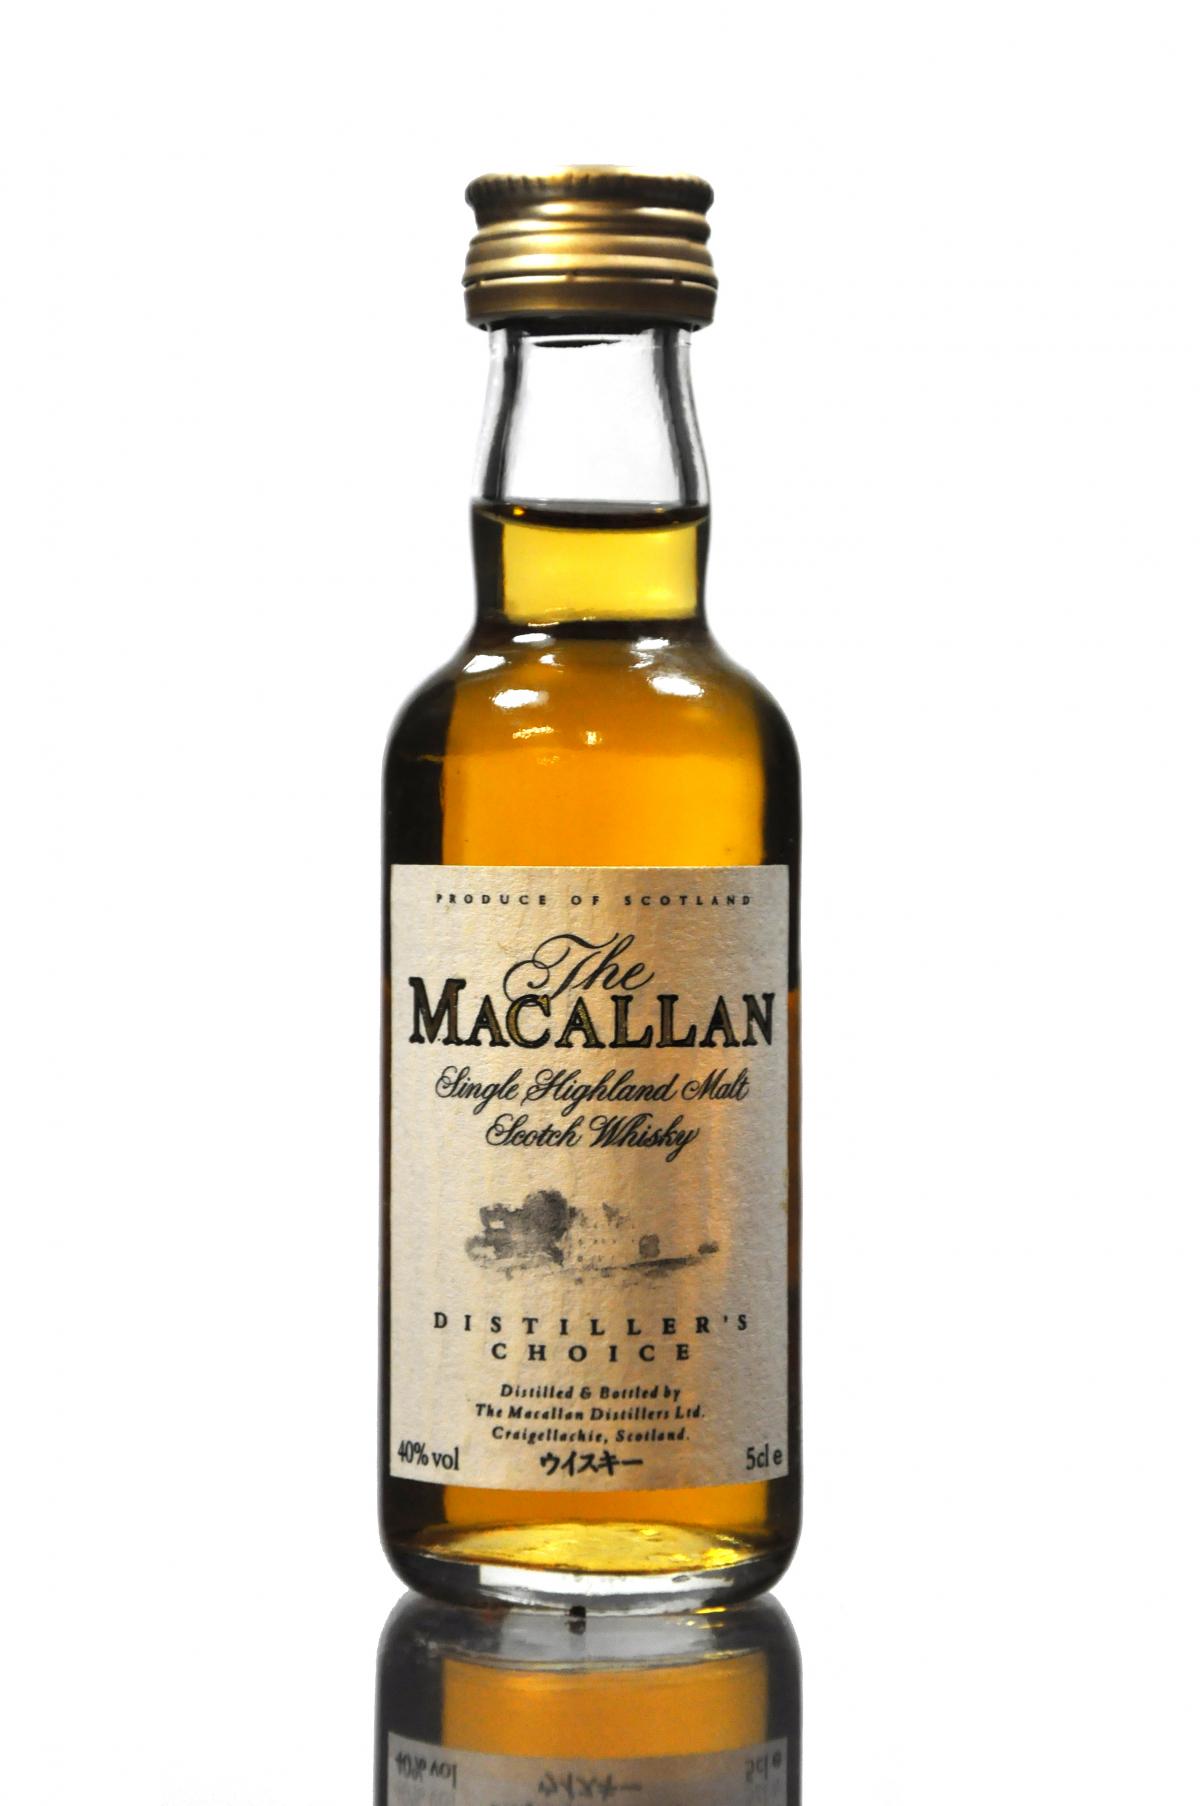 Macallan Distillers Choice Miniature